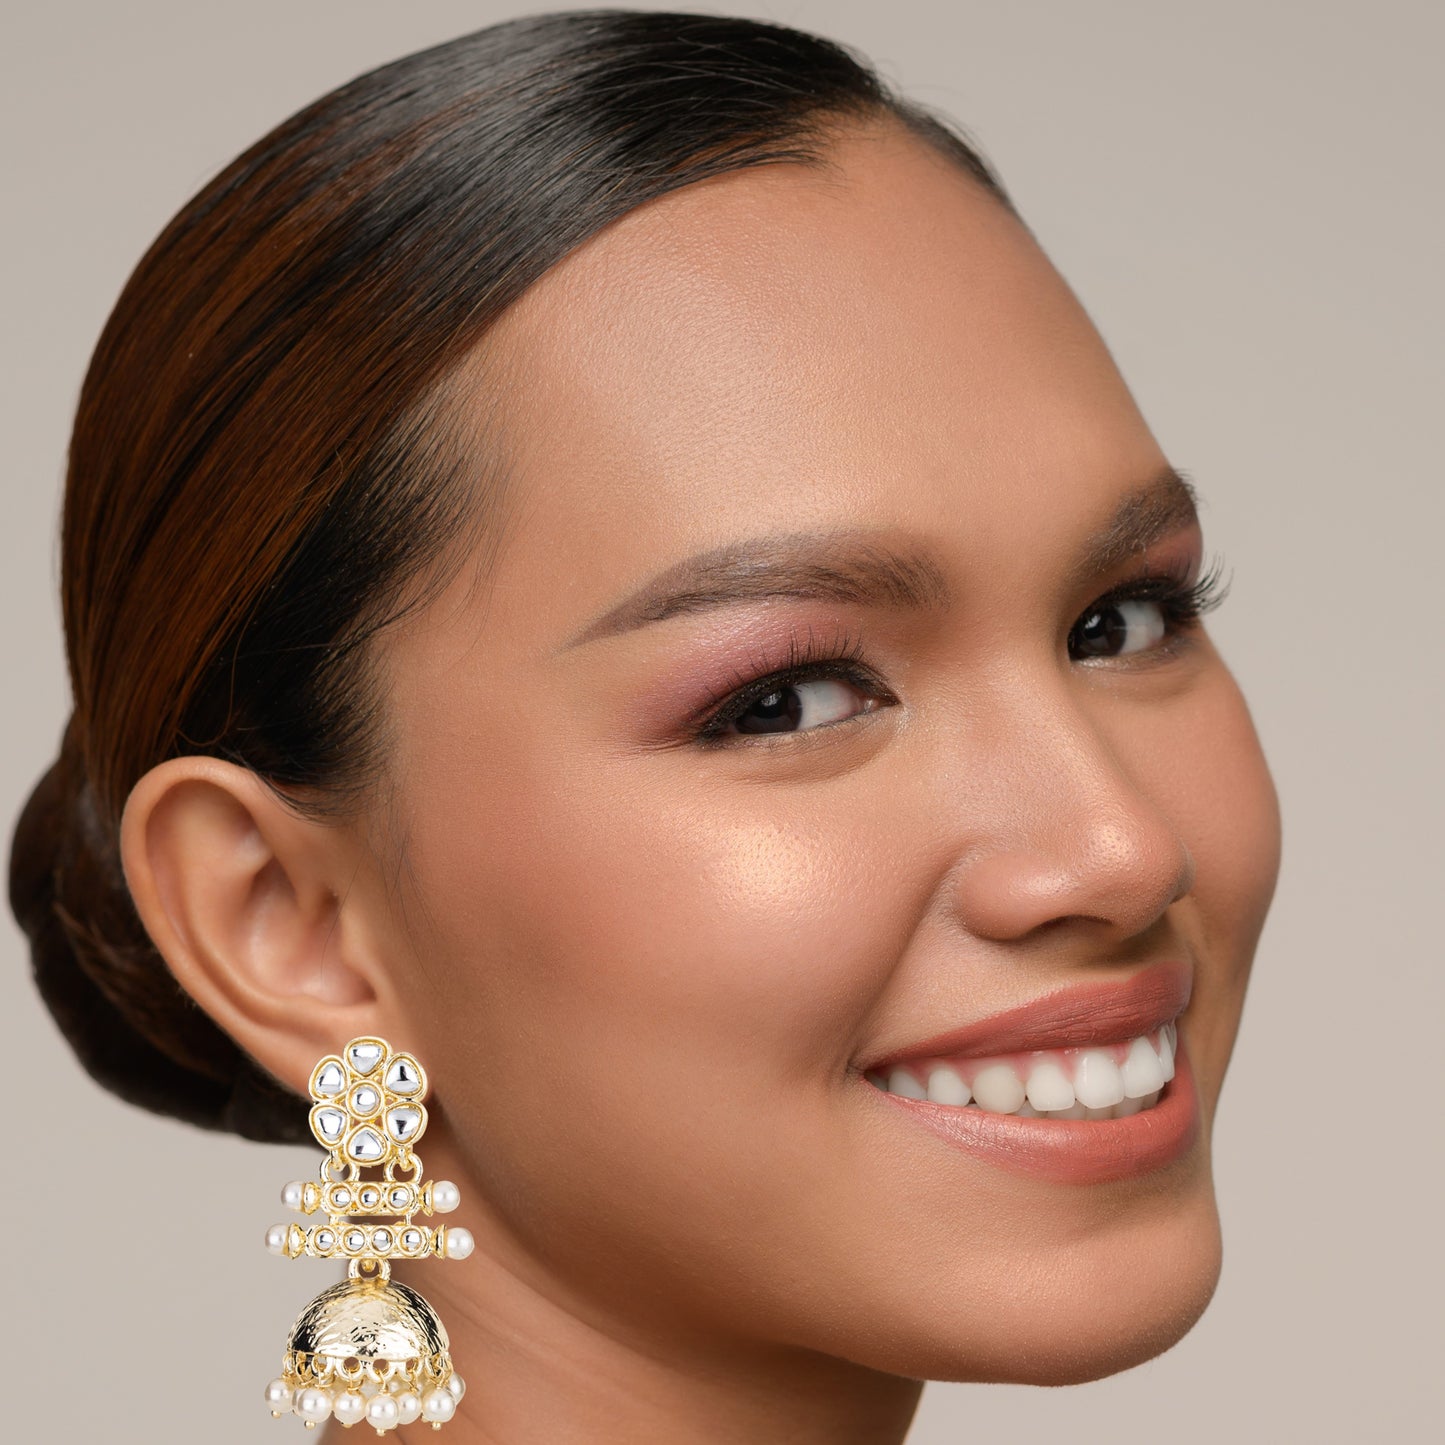 Bdiva 18K Multi Layer Gold Plated Kundan Jhumka Earrings with Semi Cultured Pearls.